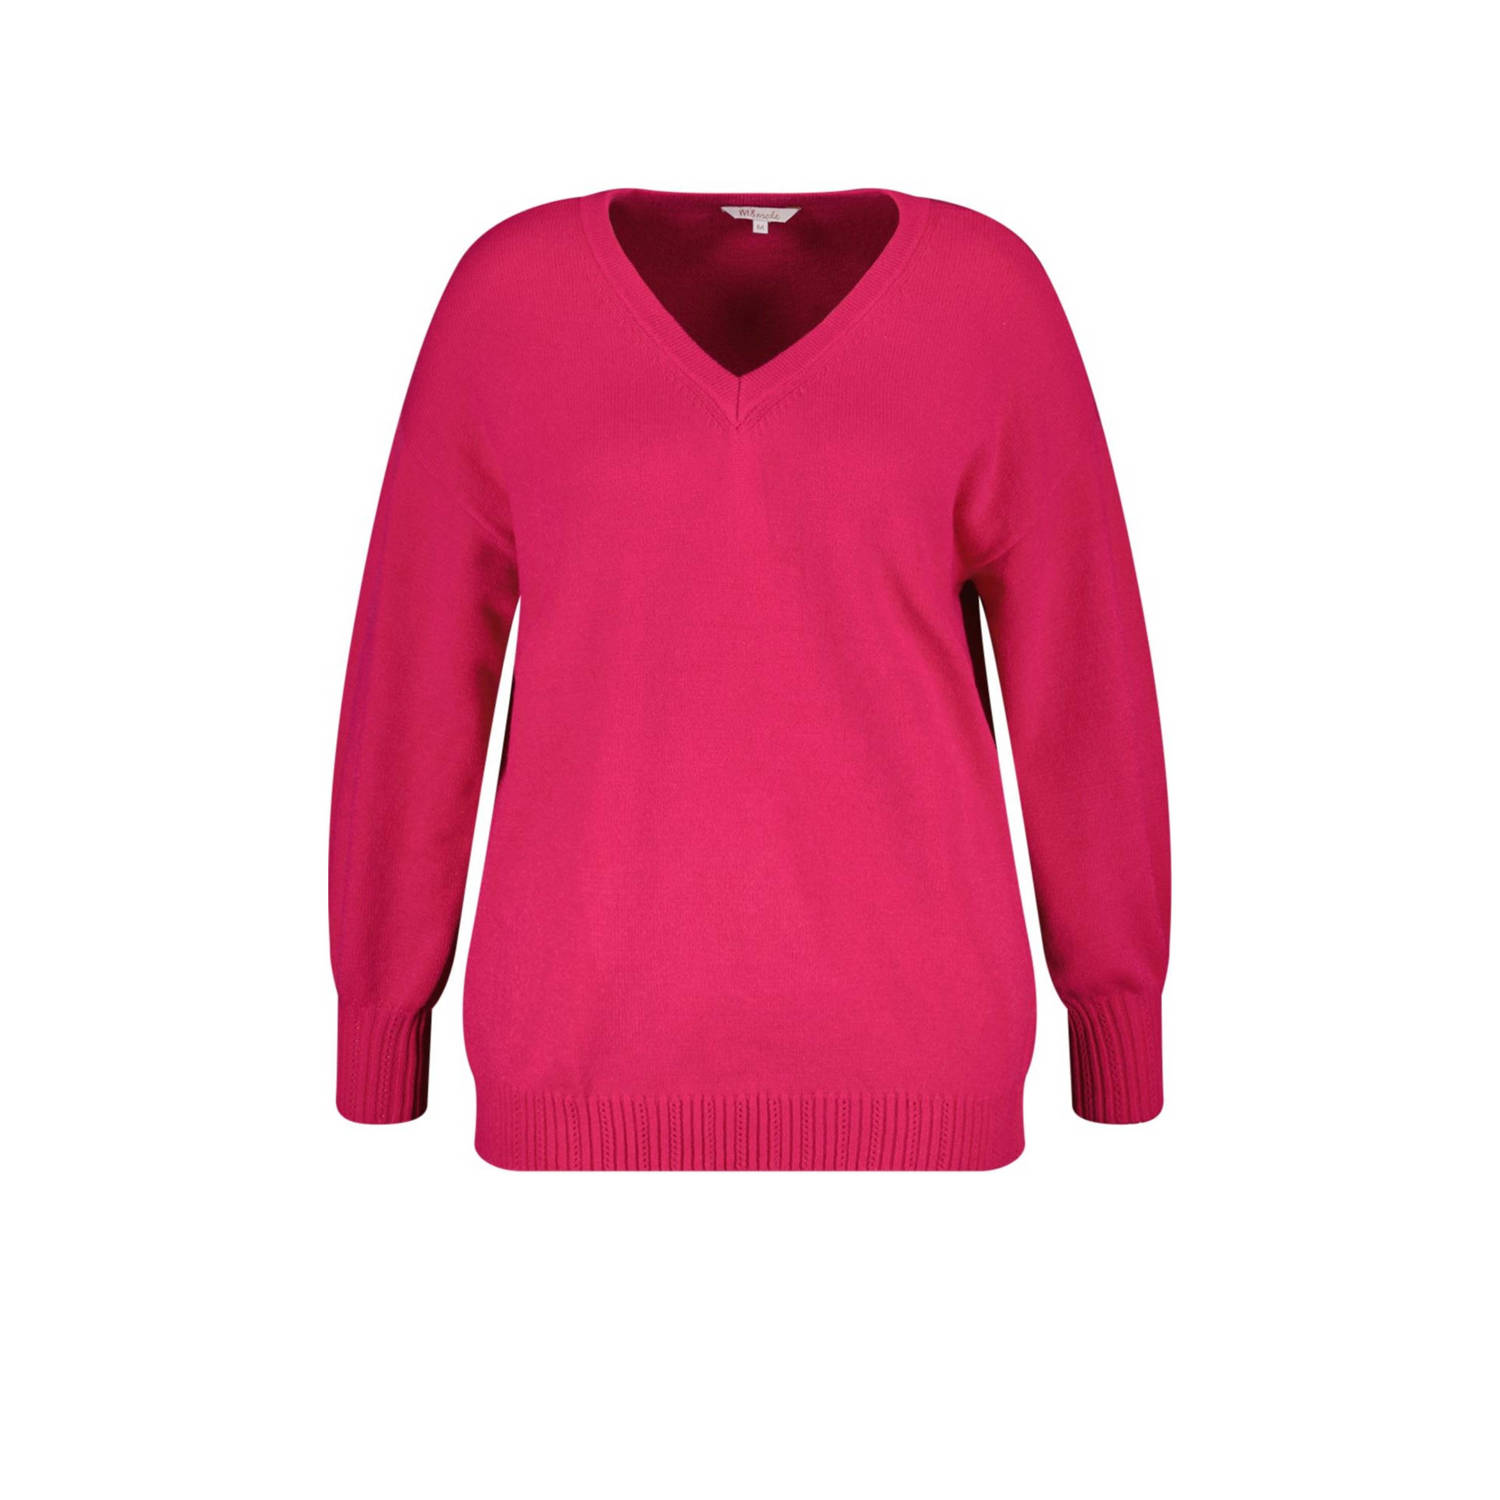 MS Mode fijngebreide trui roze